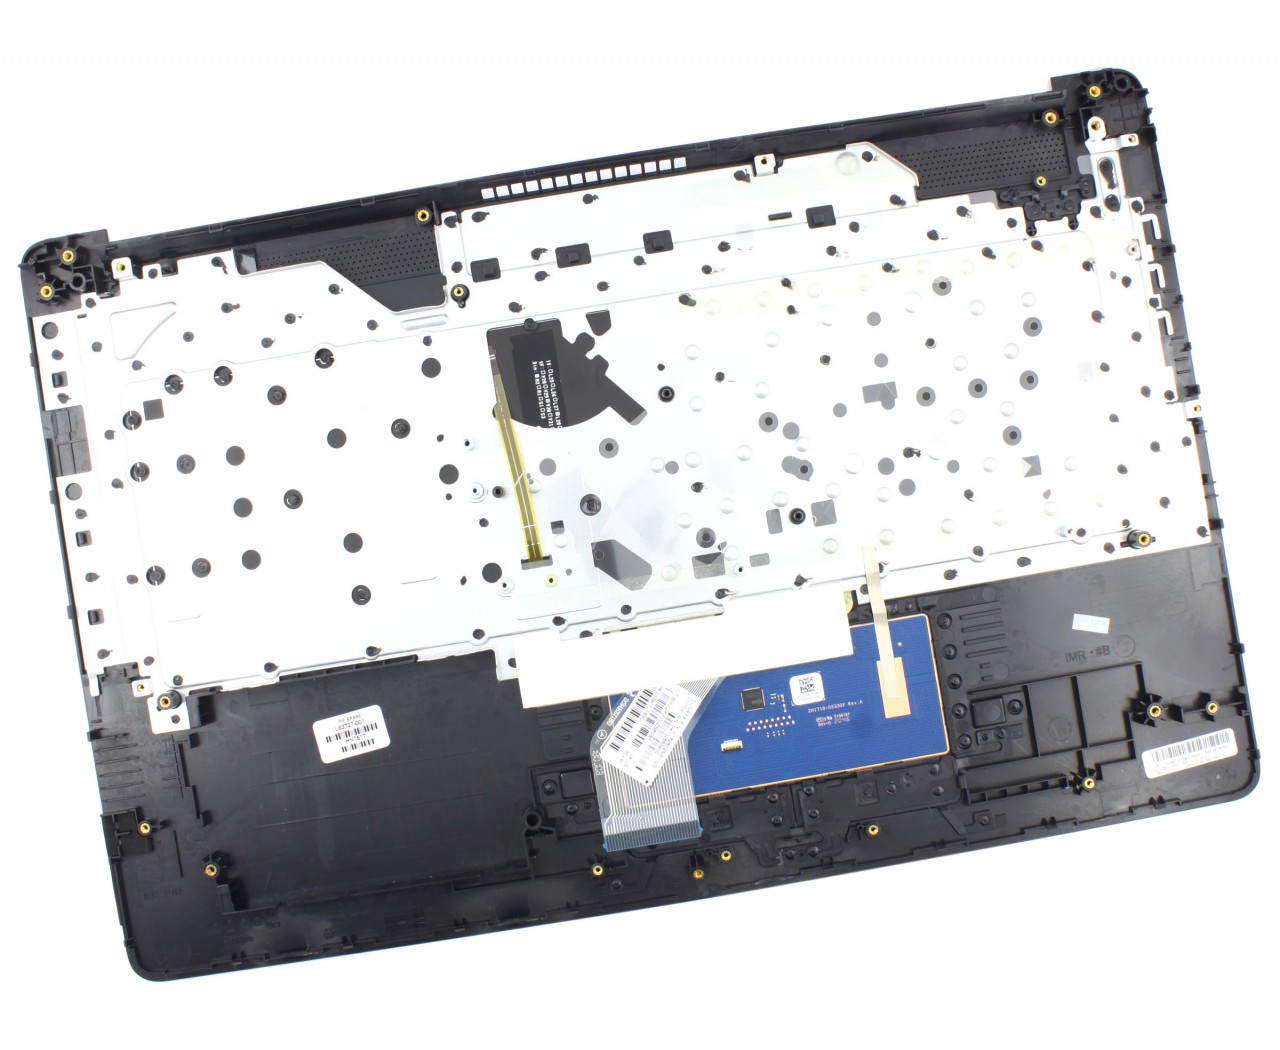 Tastatura HP PK1328B3A00 Neagra cu Palmrest Argintiu si TouchPad iluminata backlit argintiu